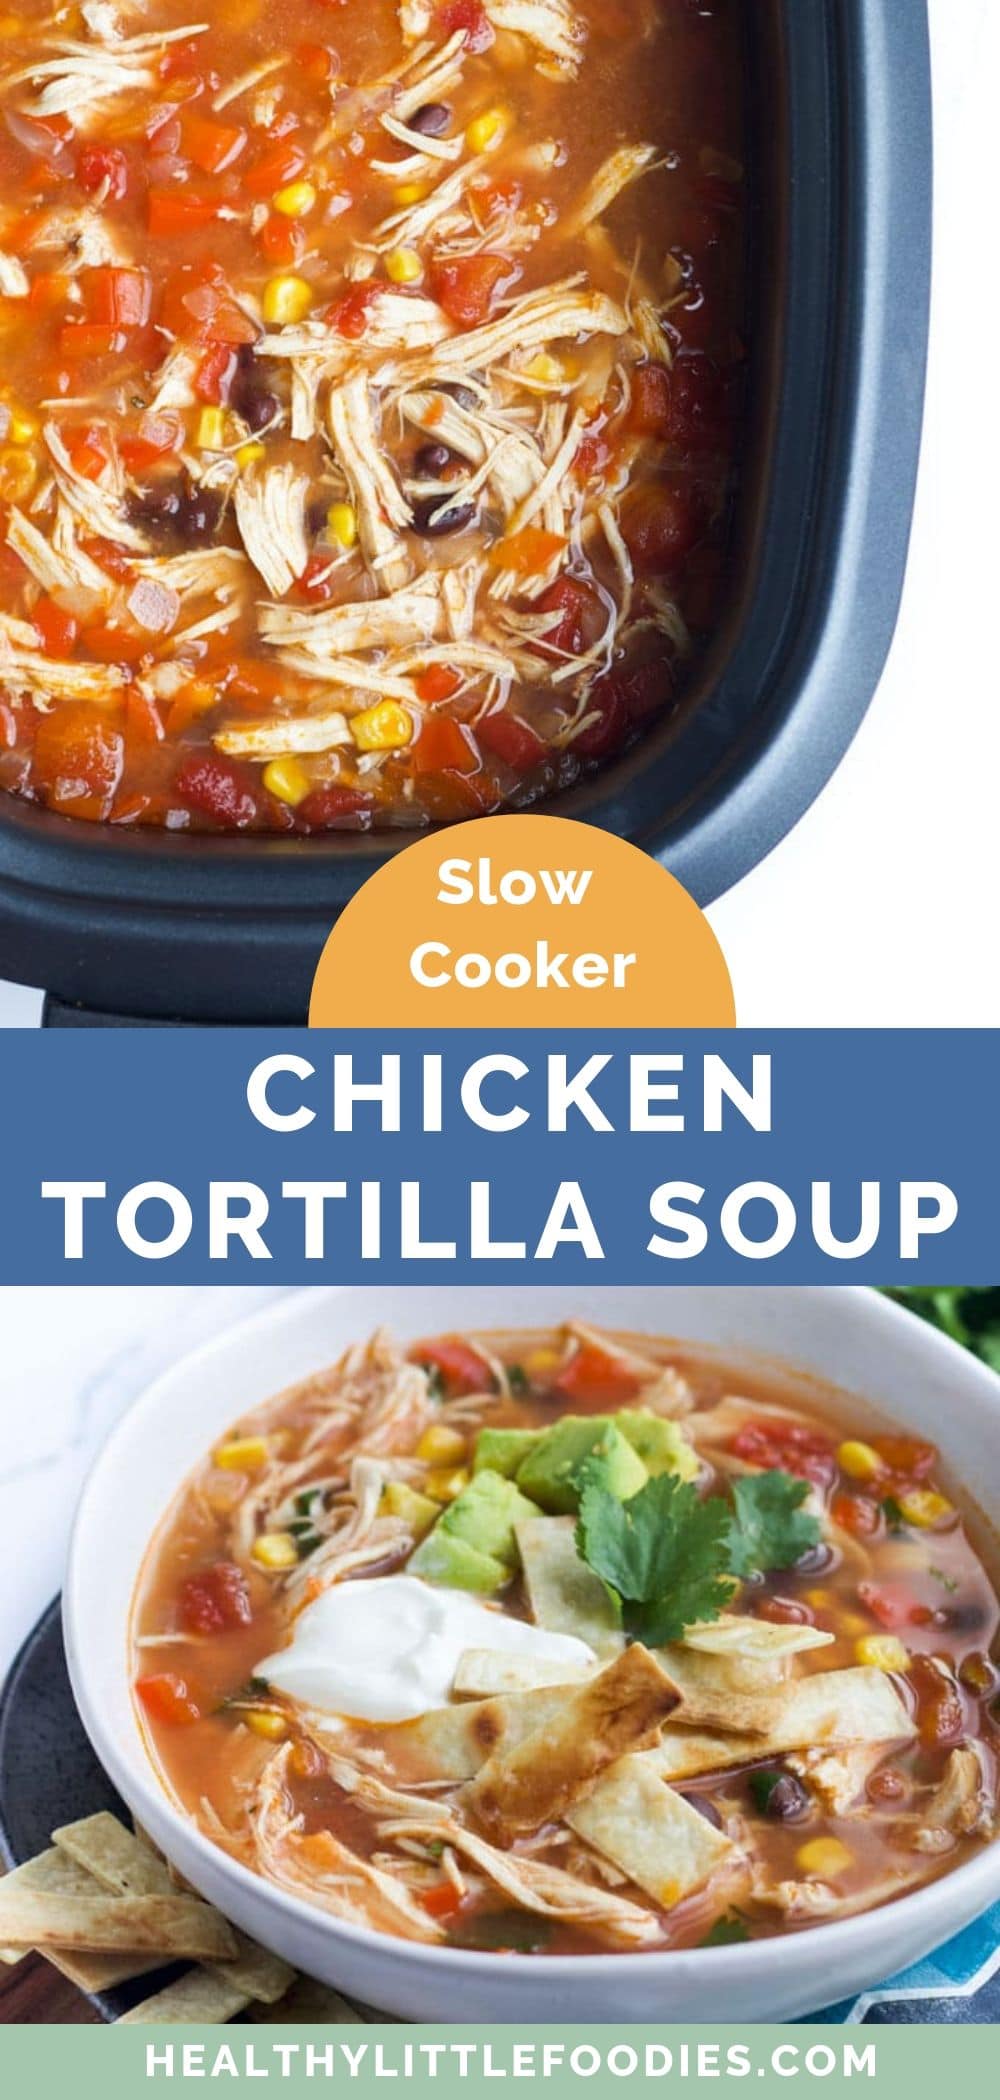 Slow Cooker Chicken Tortilla Soup - Heathy Little Foodies